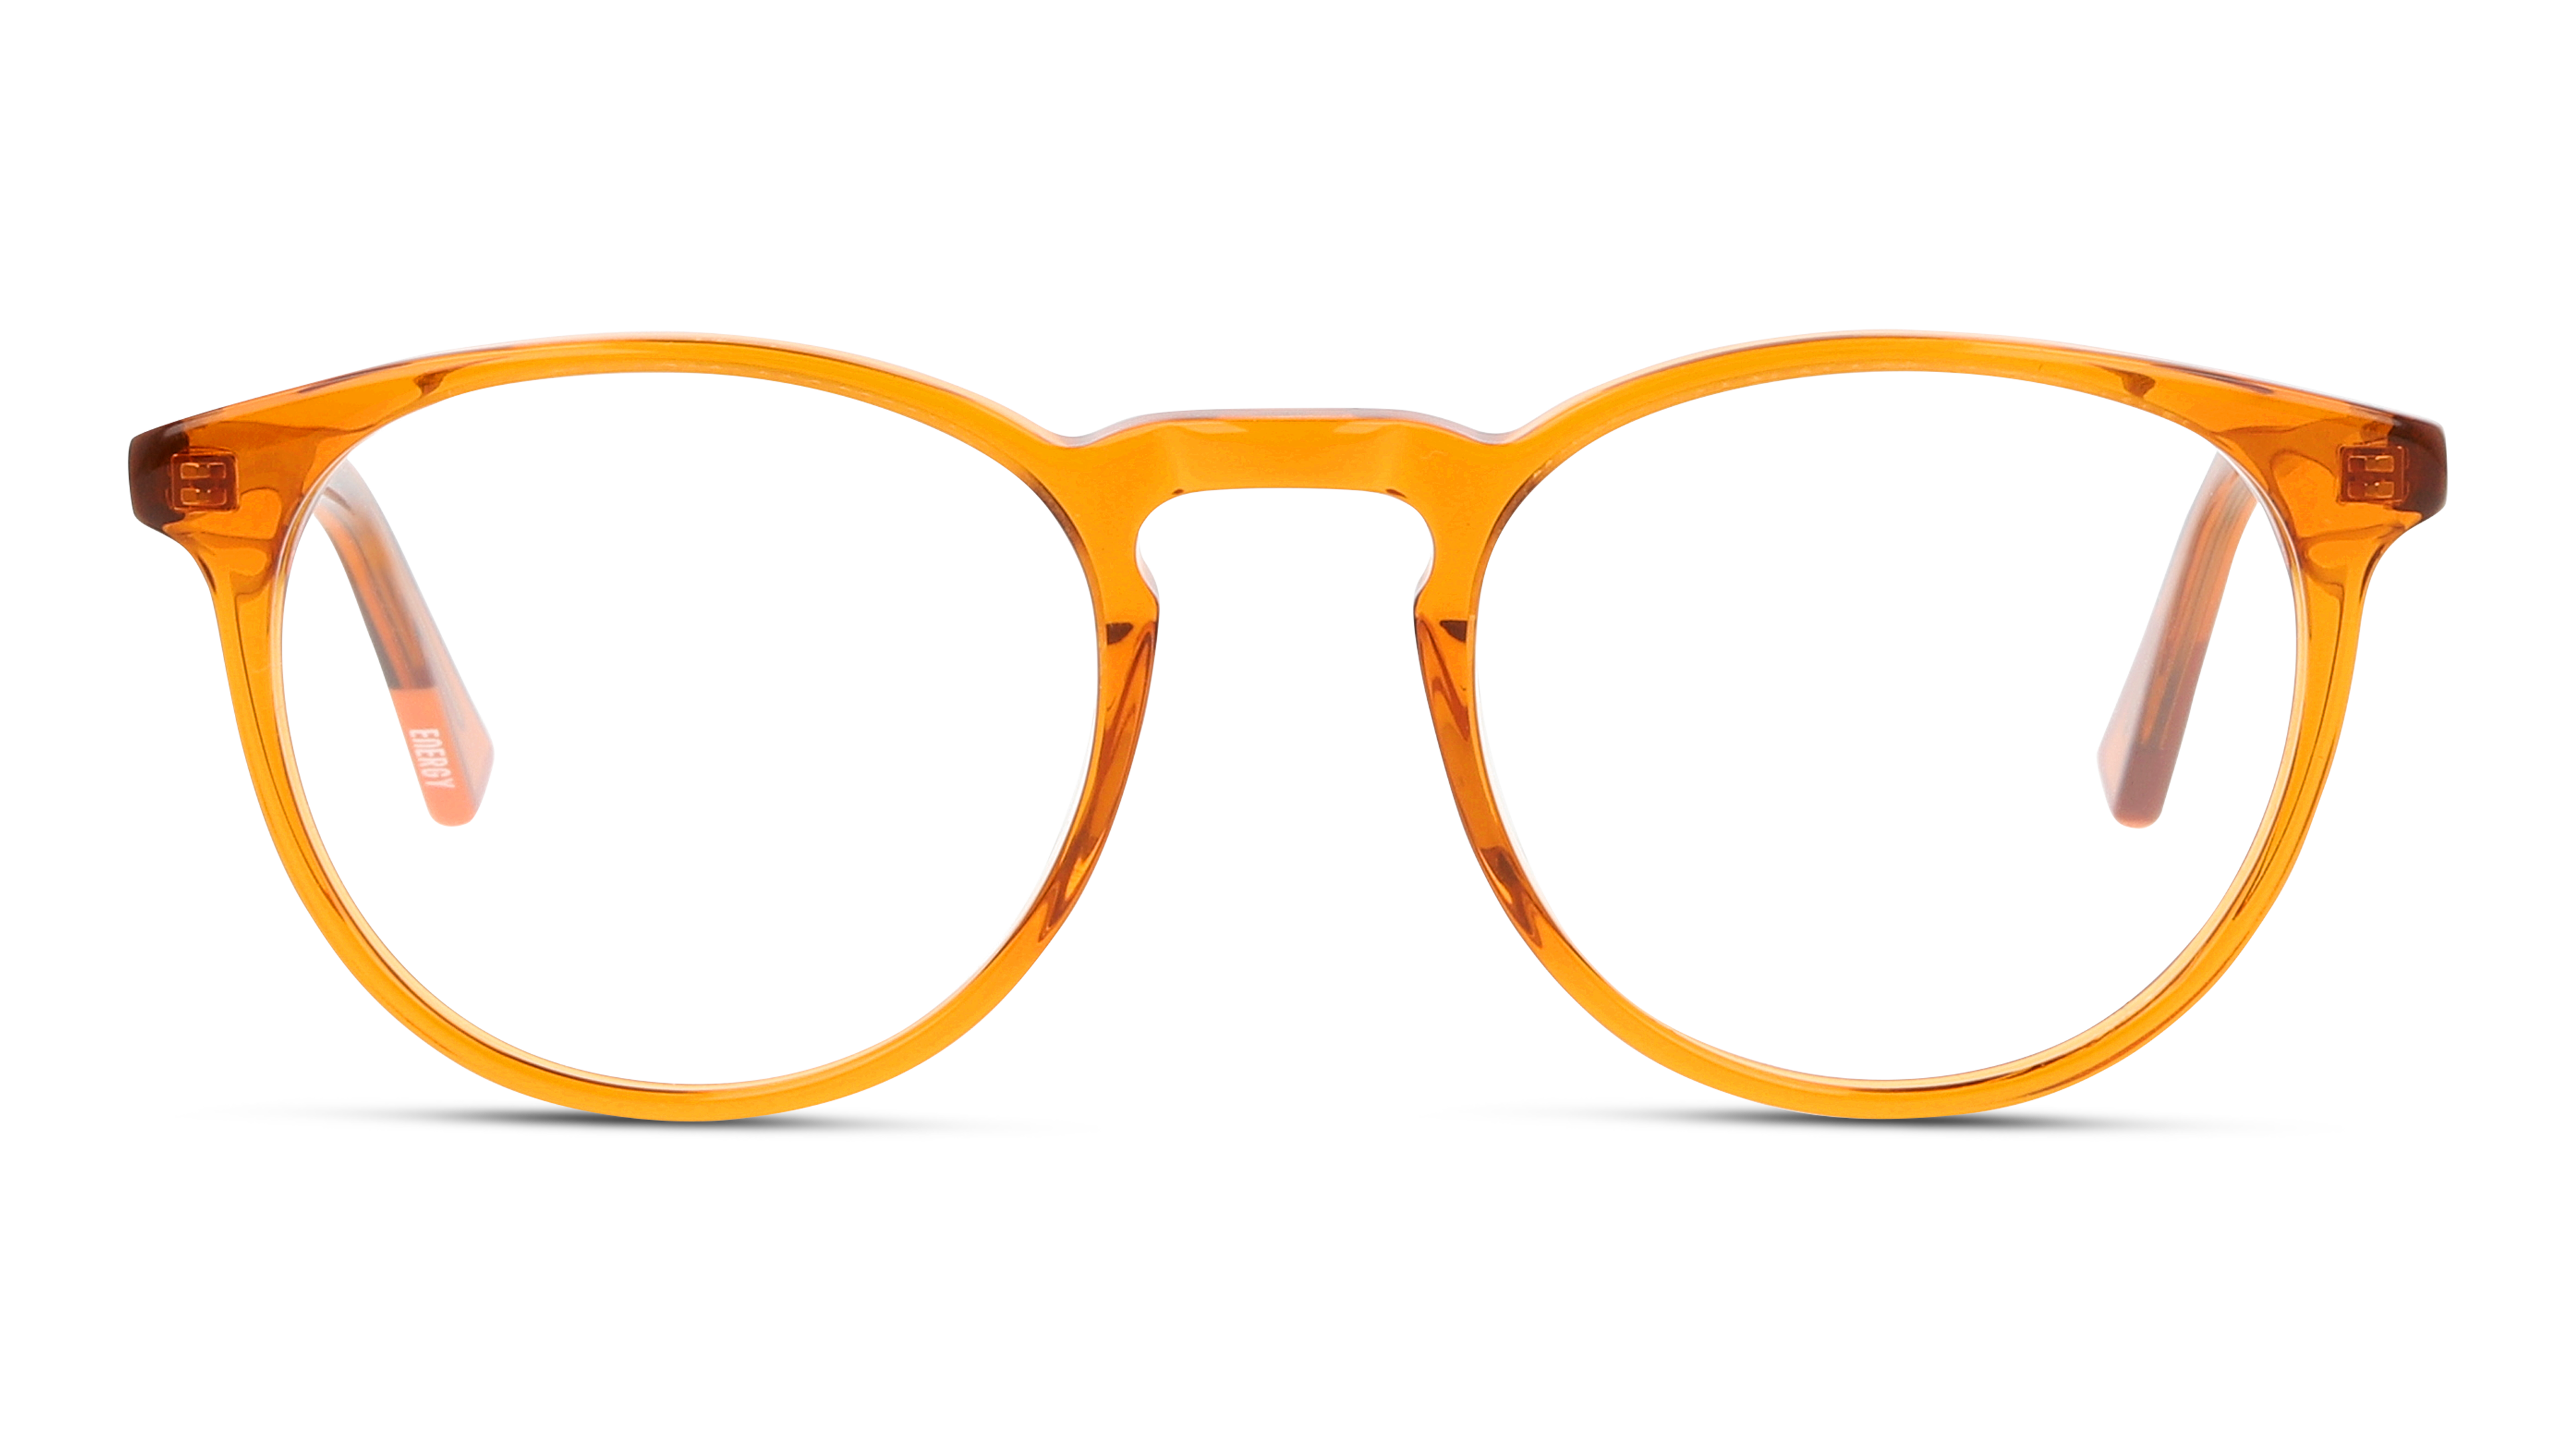 Front Unofficial UNOM0001 (OT00) Glasses Transparent / Orange